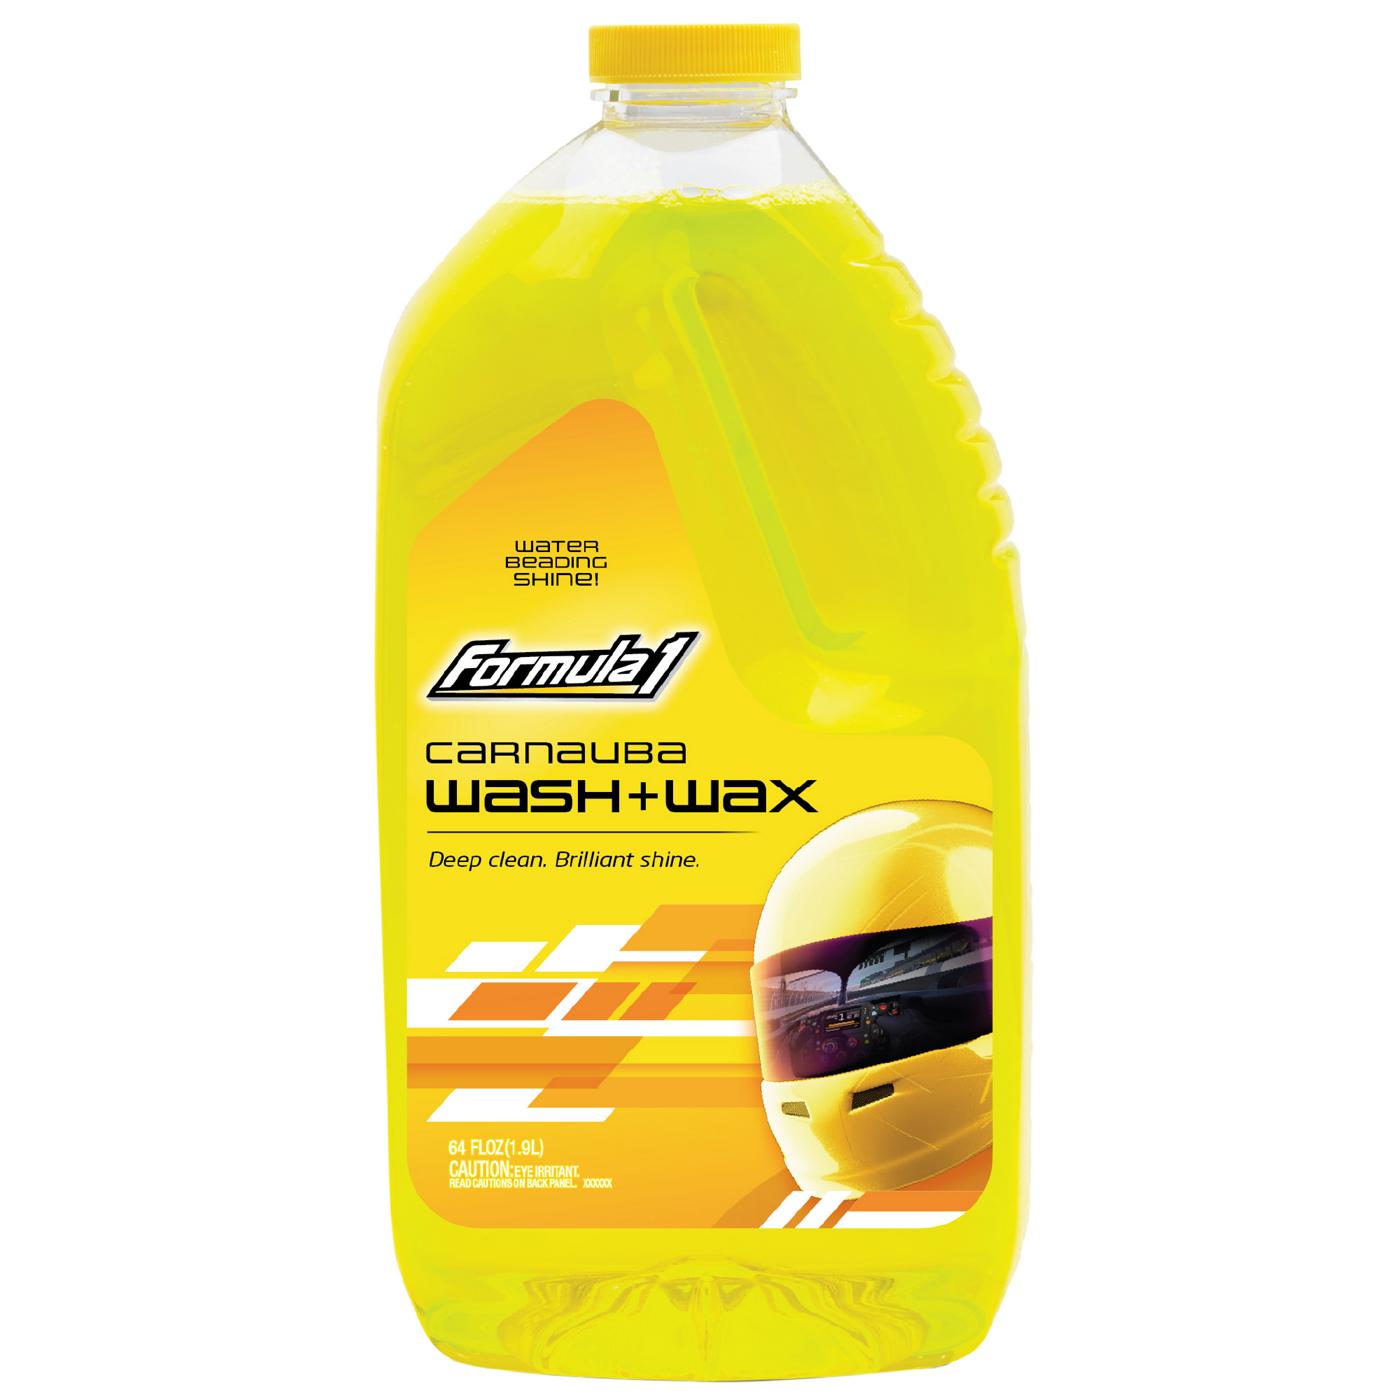 2 Formula 1 Carnauba Car Wash and Wax High Performance Auto Cleaner Shampoo  16oz